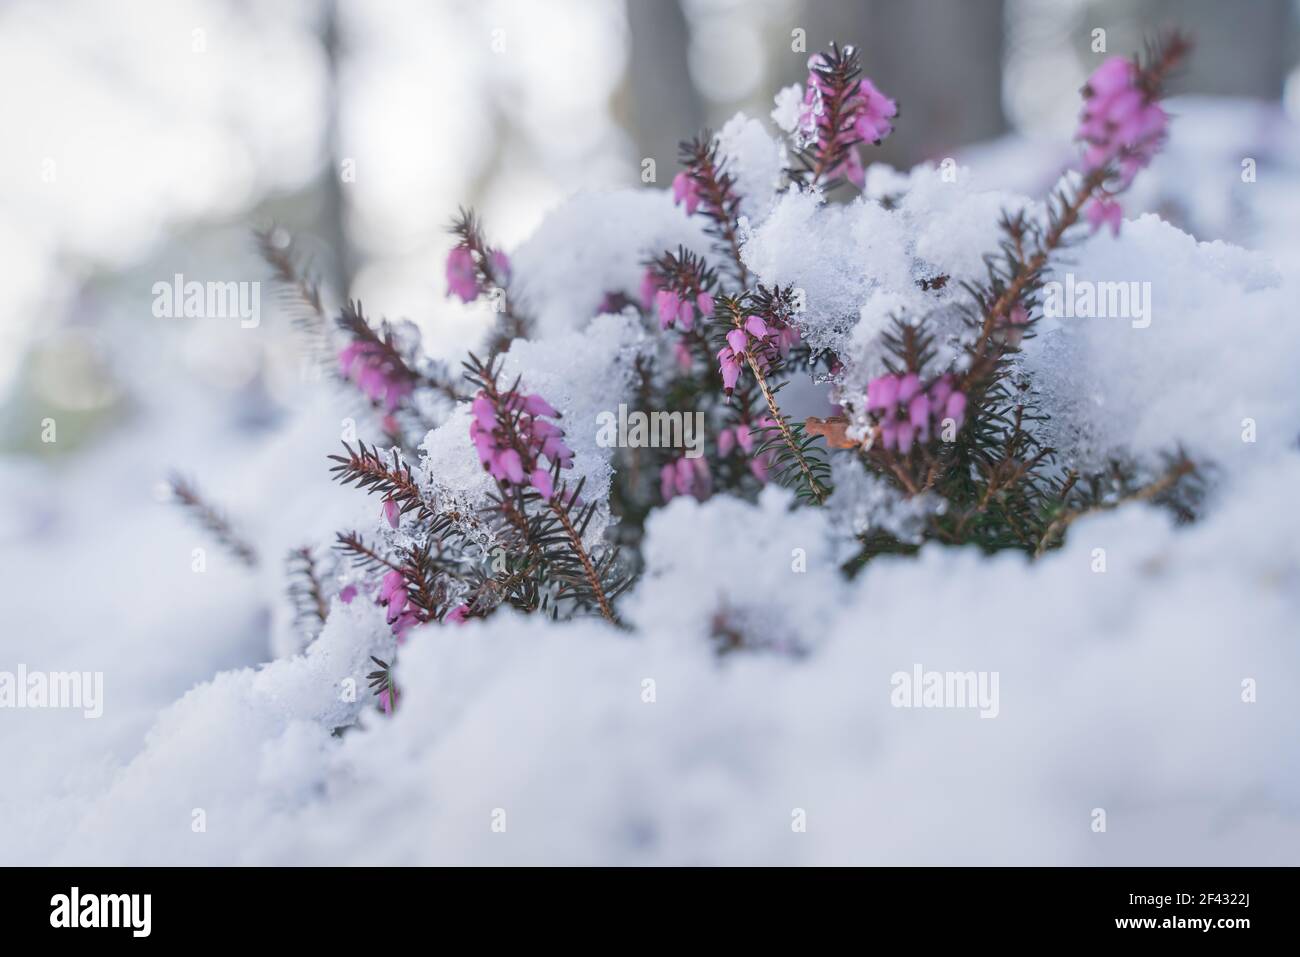 Battle of springtime against winter, purple spring heath covered by fresh snow, Austria Stock Photo